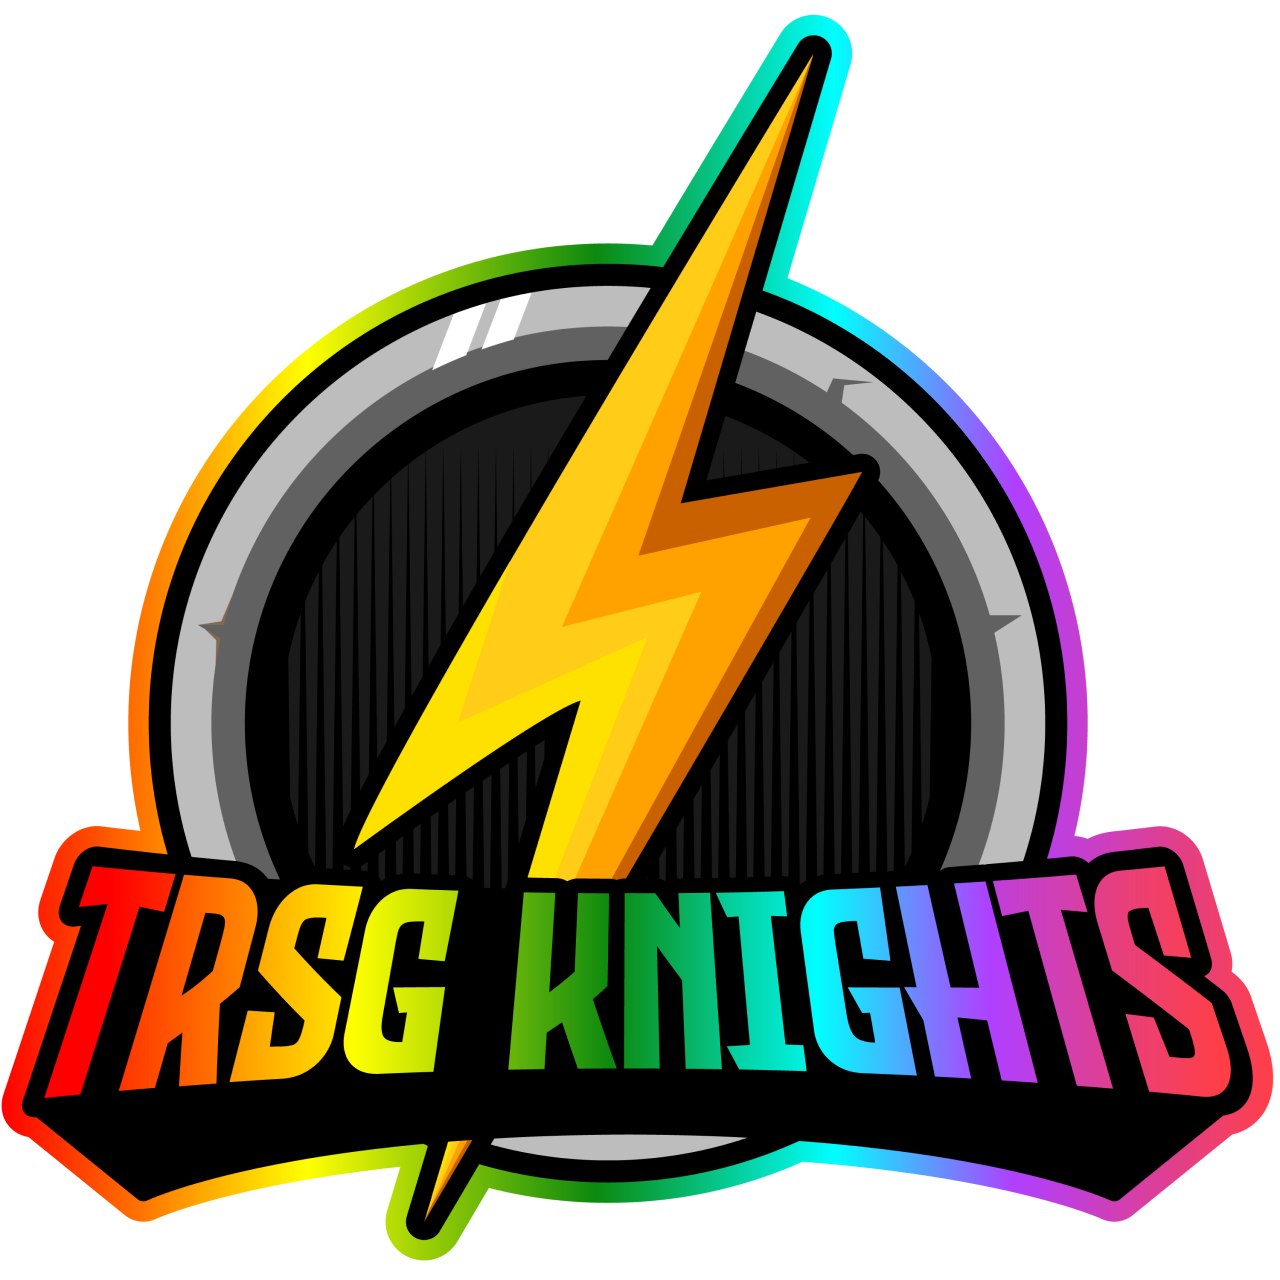 TRSG! Knights